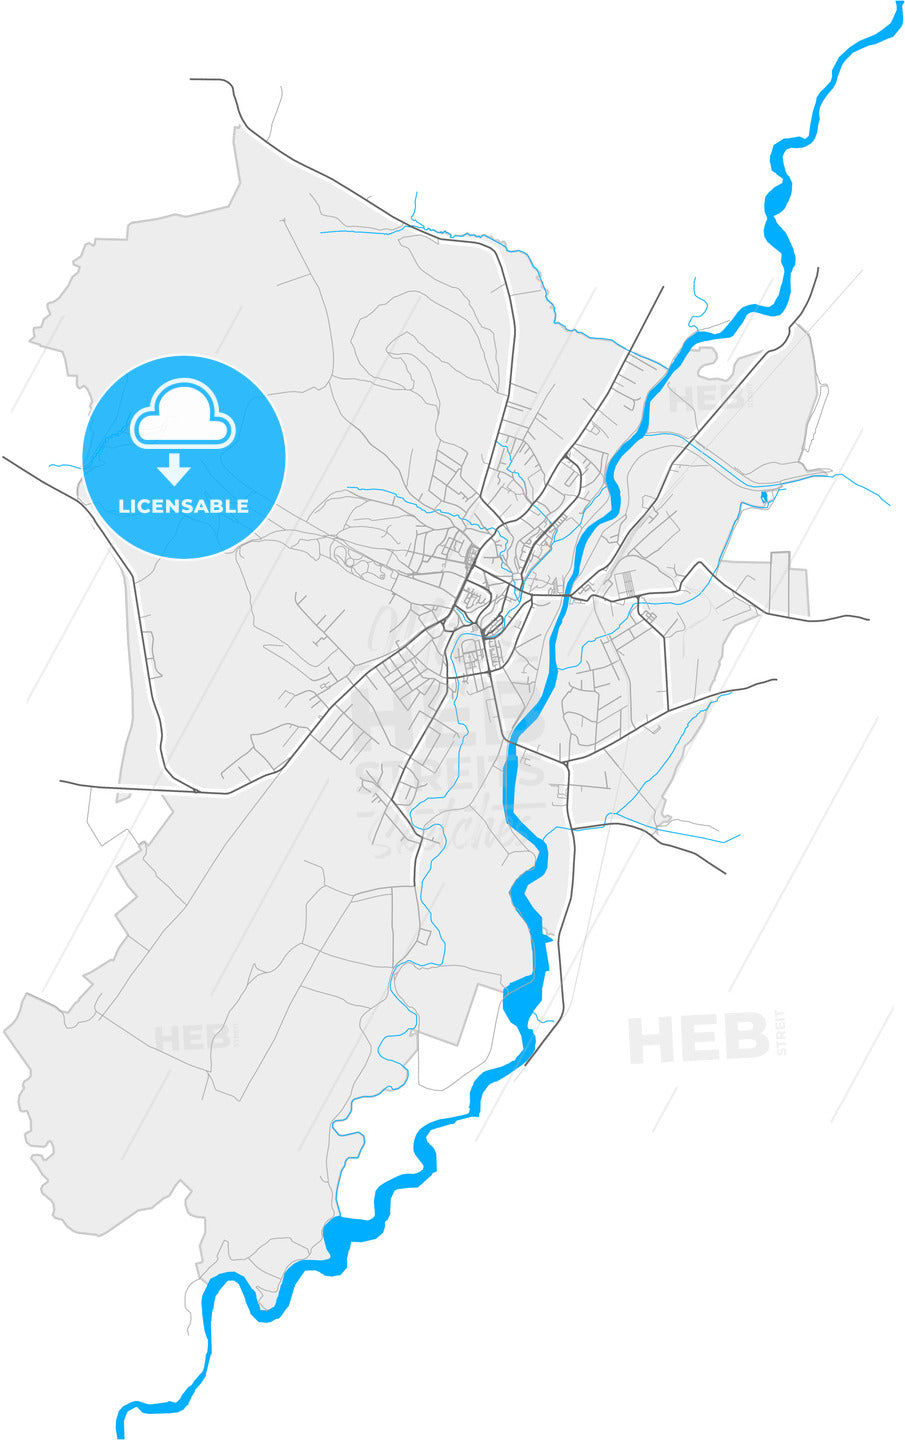 Reghin, Mureș, Romania, high quality vector map